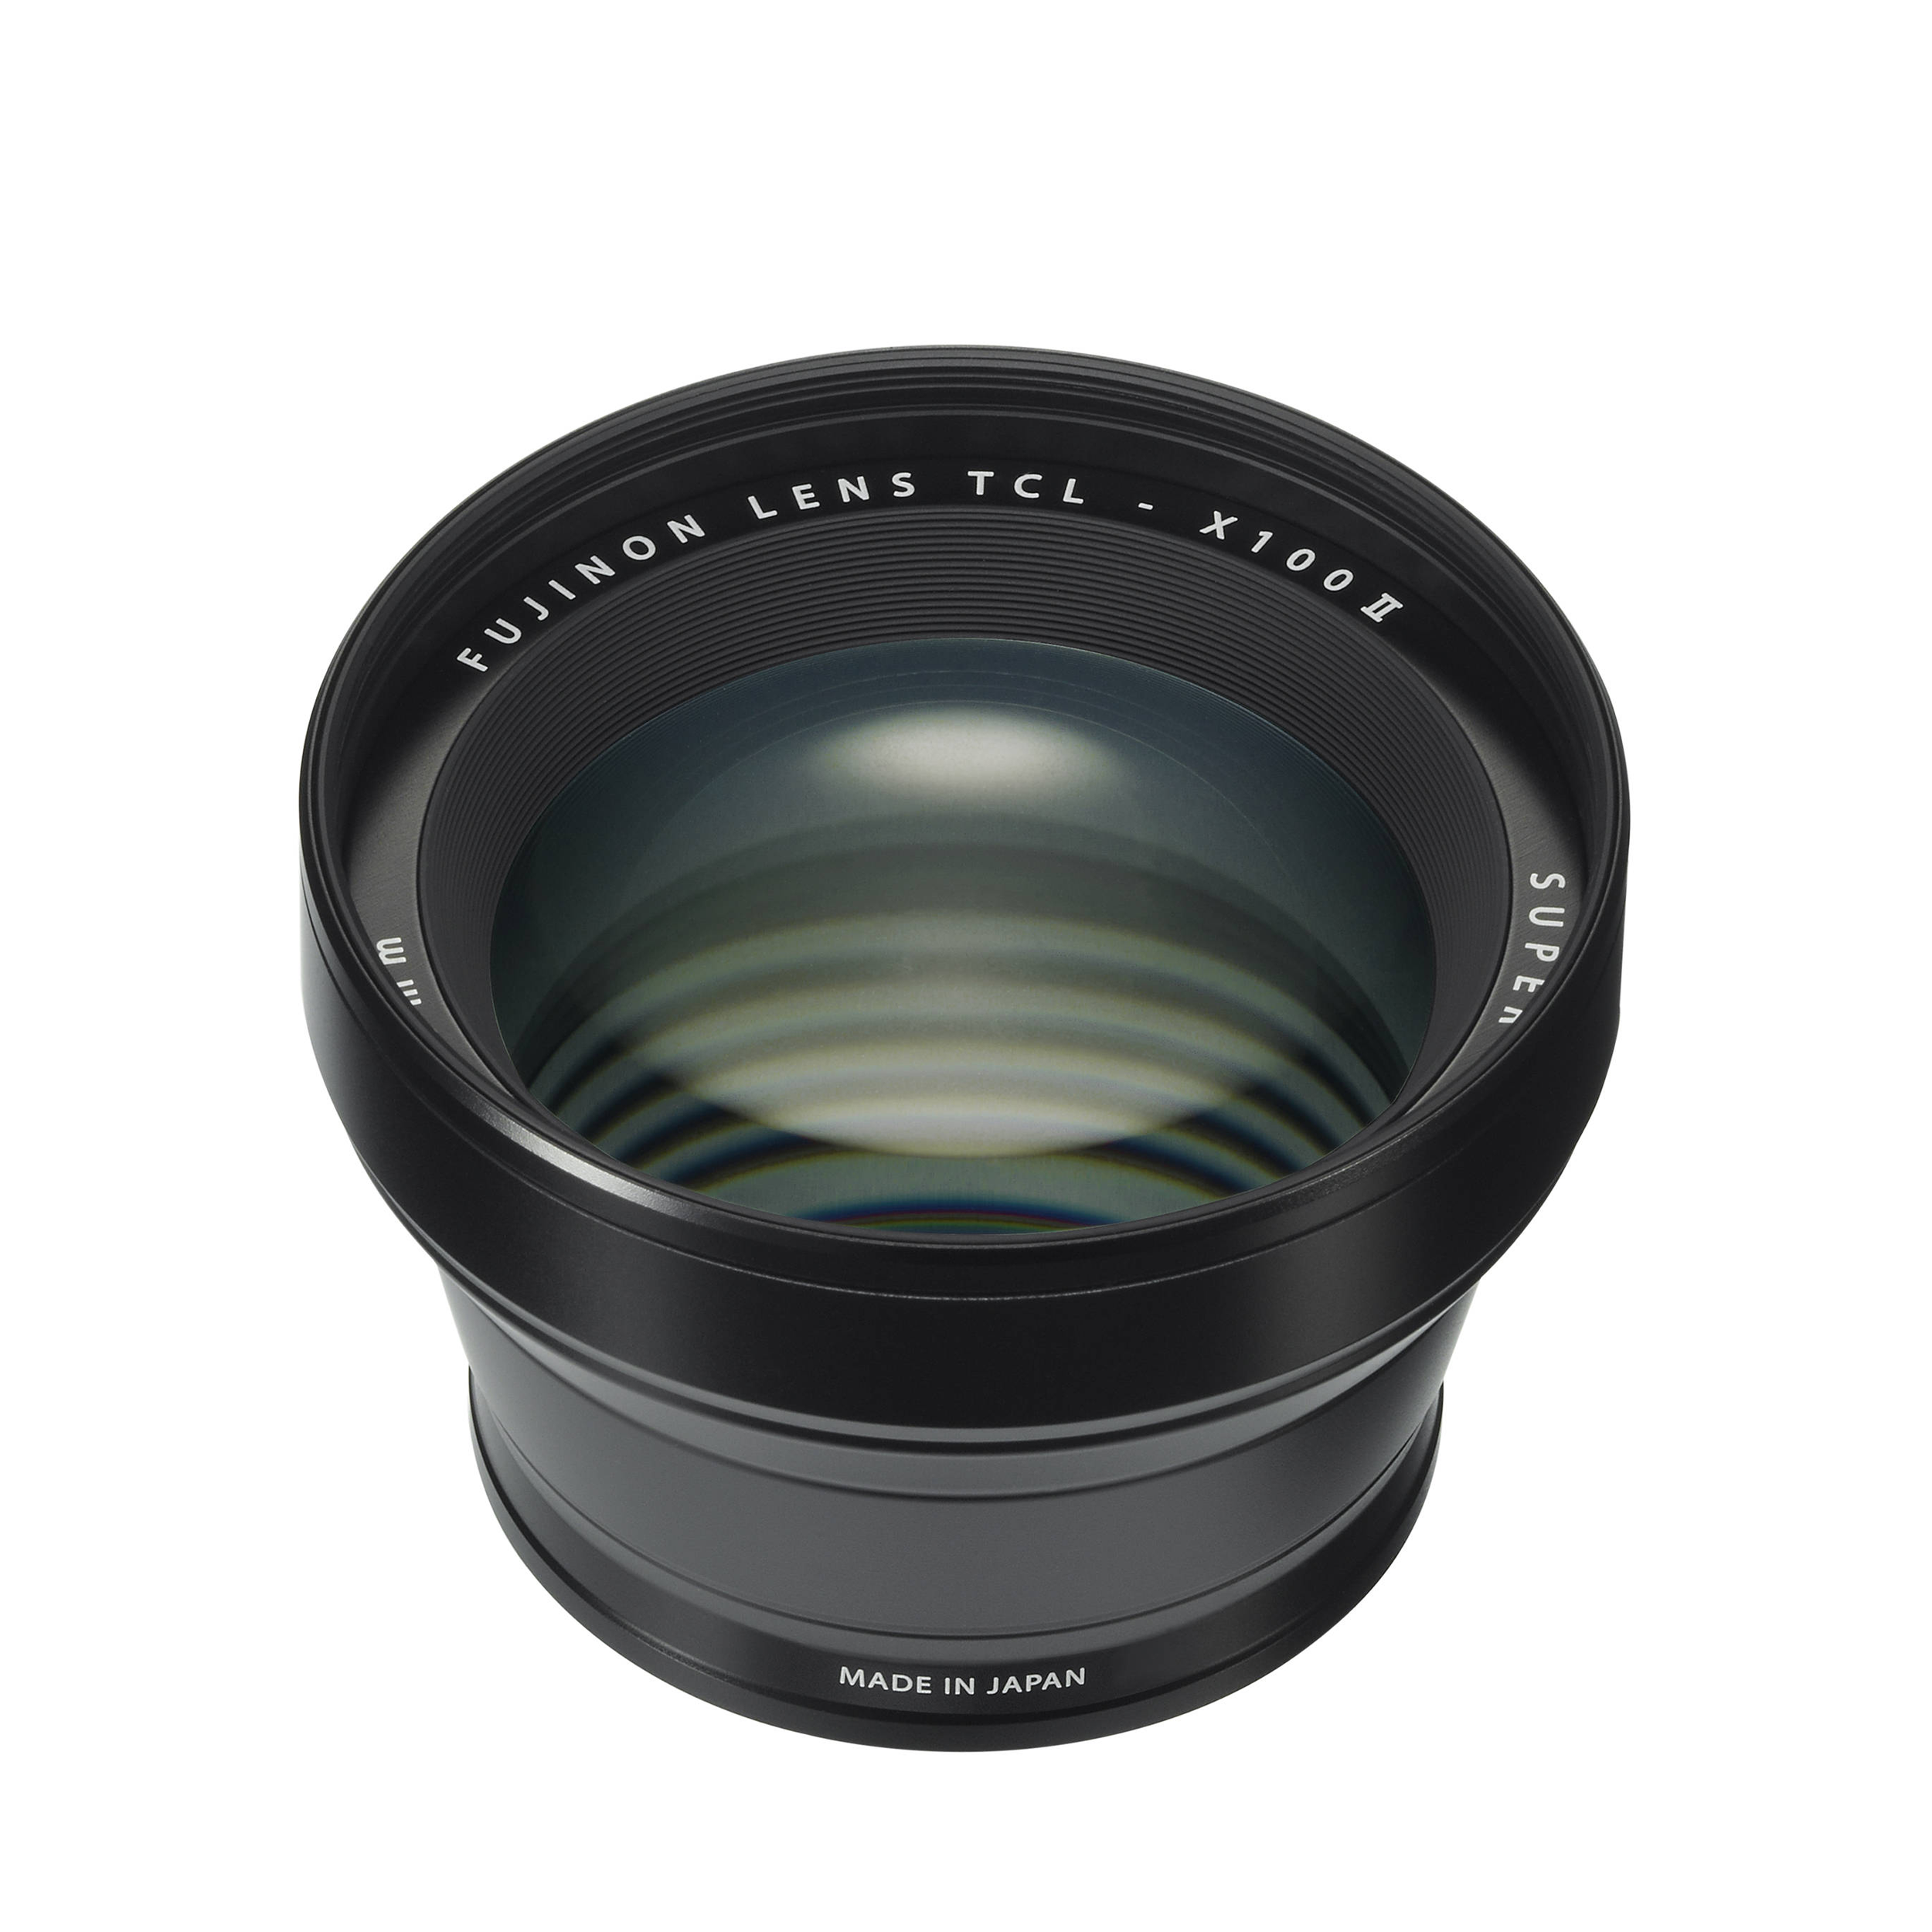 FUJIFILM TCL-X100 II Tele Conversion Lens (Black)